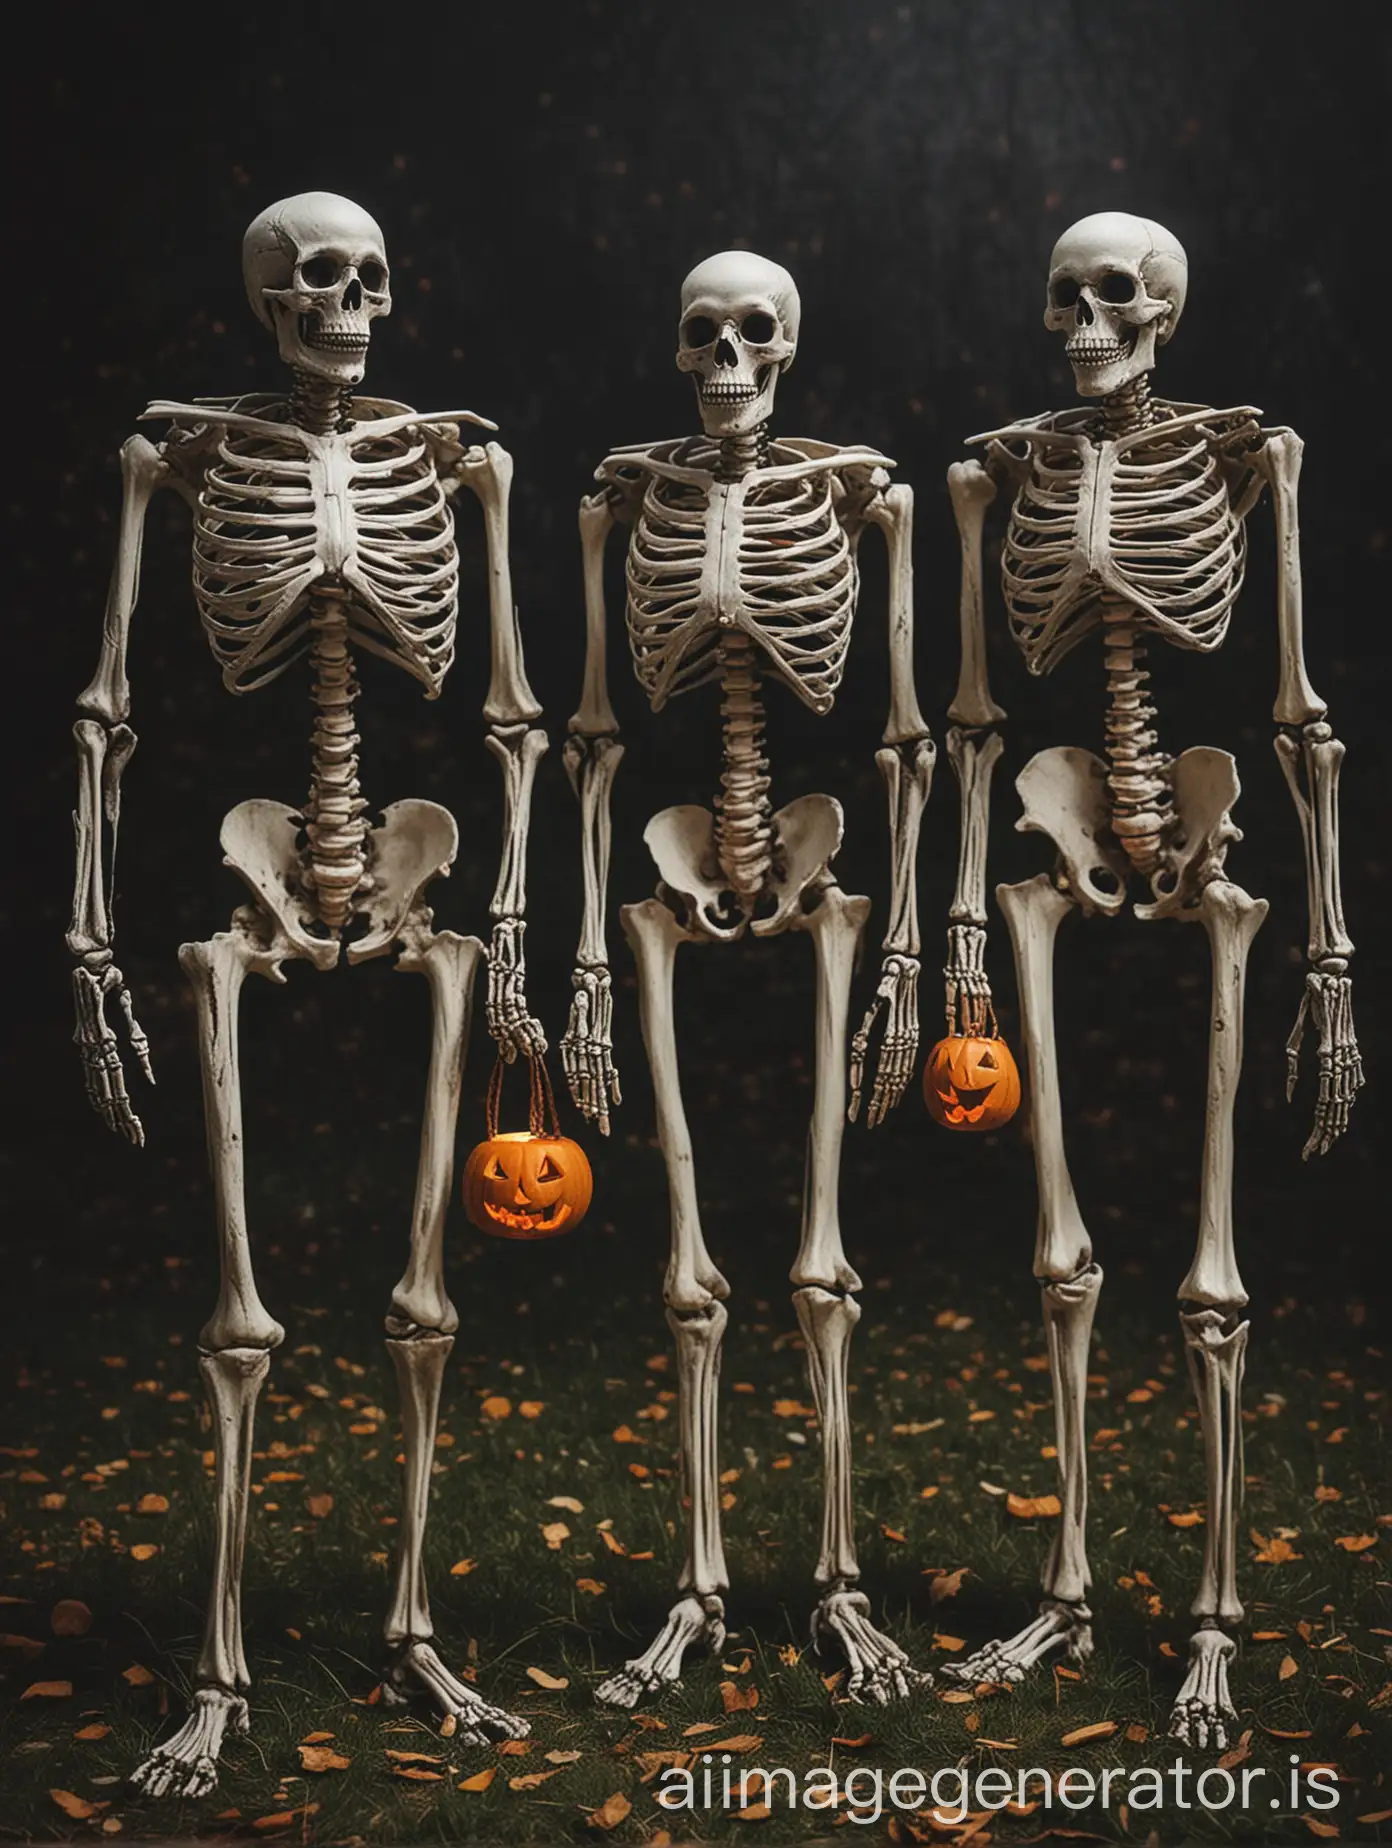 Halloween skeletons